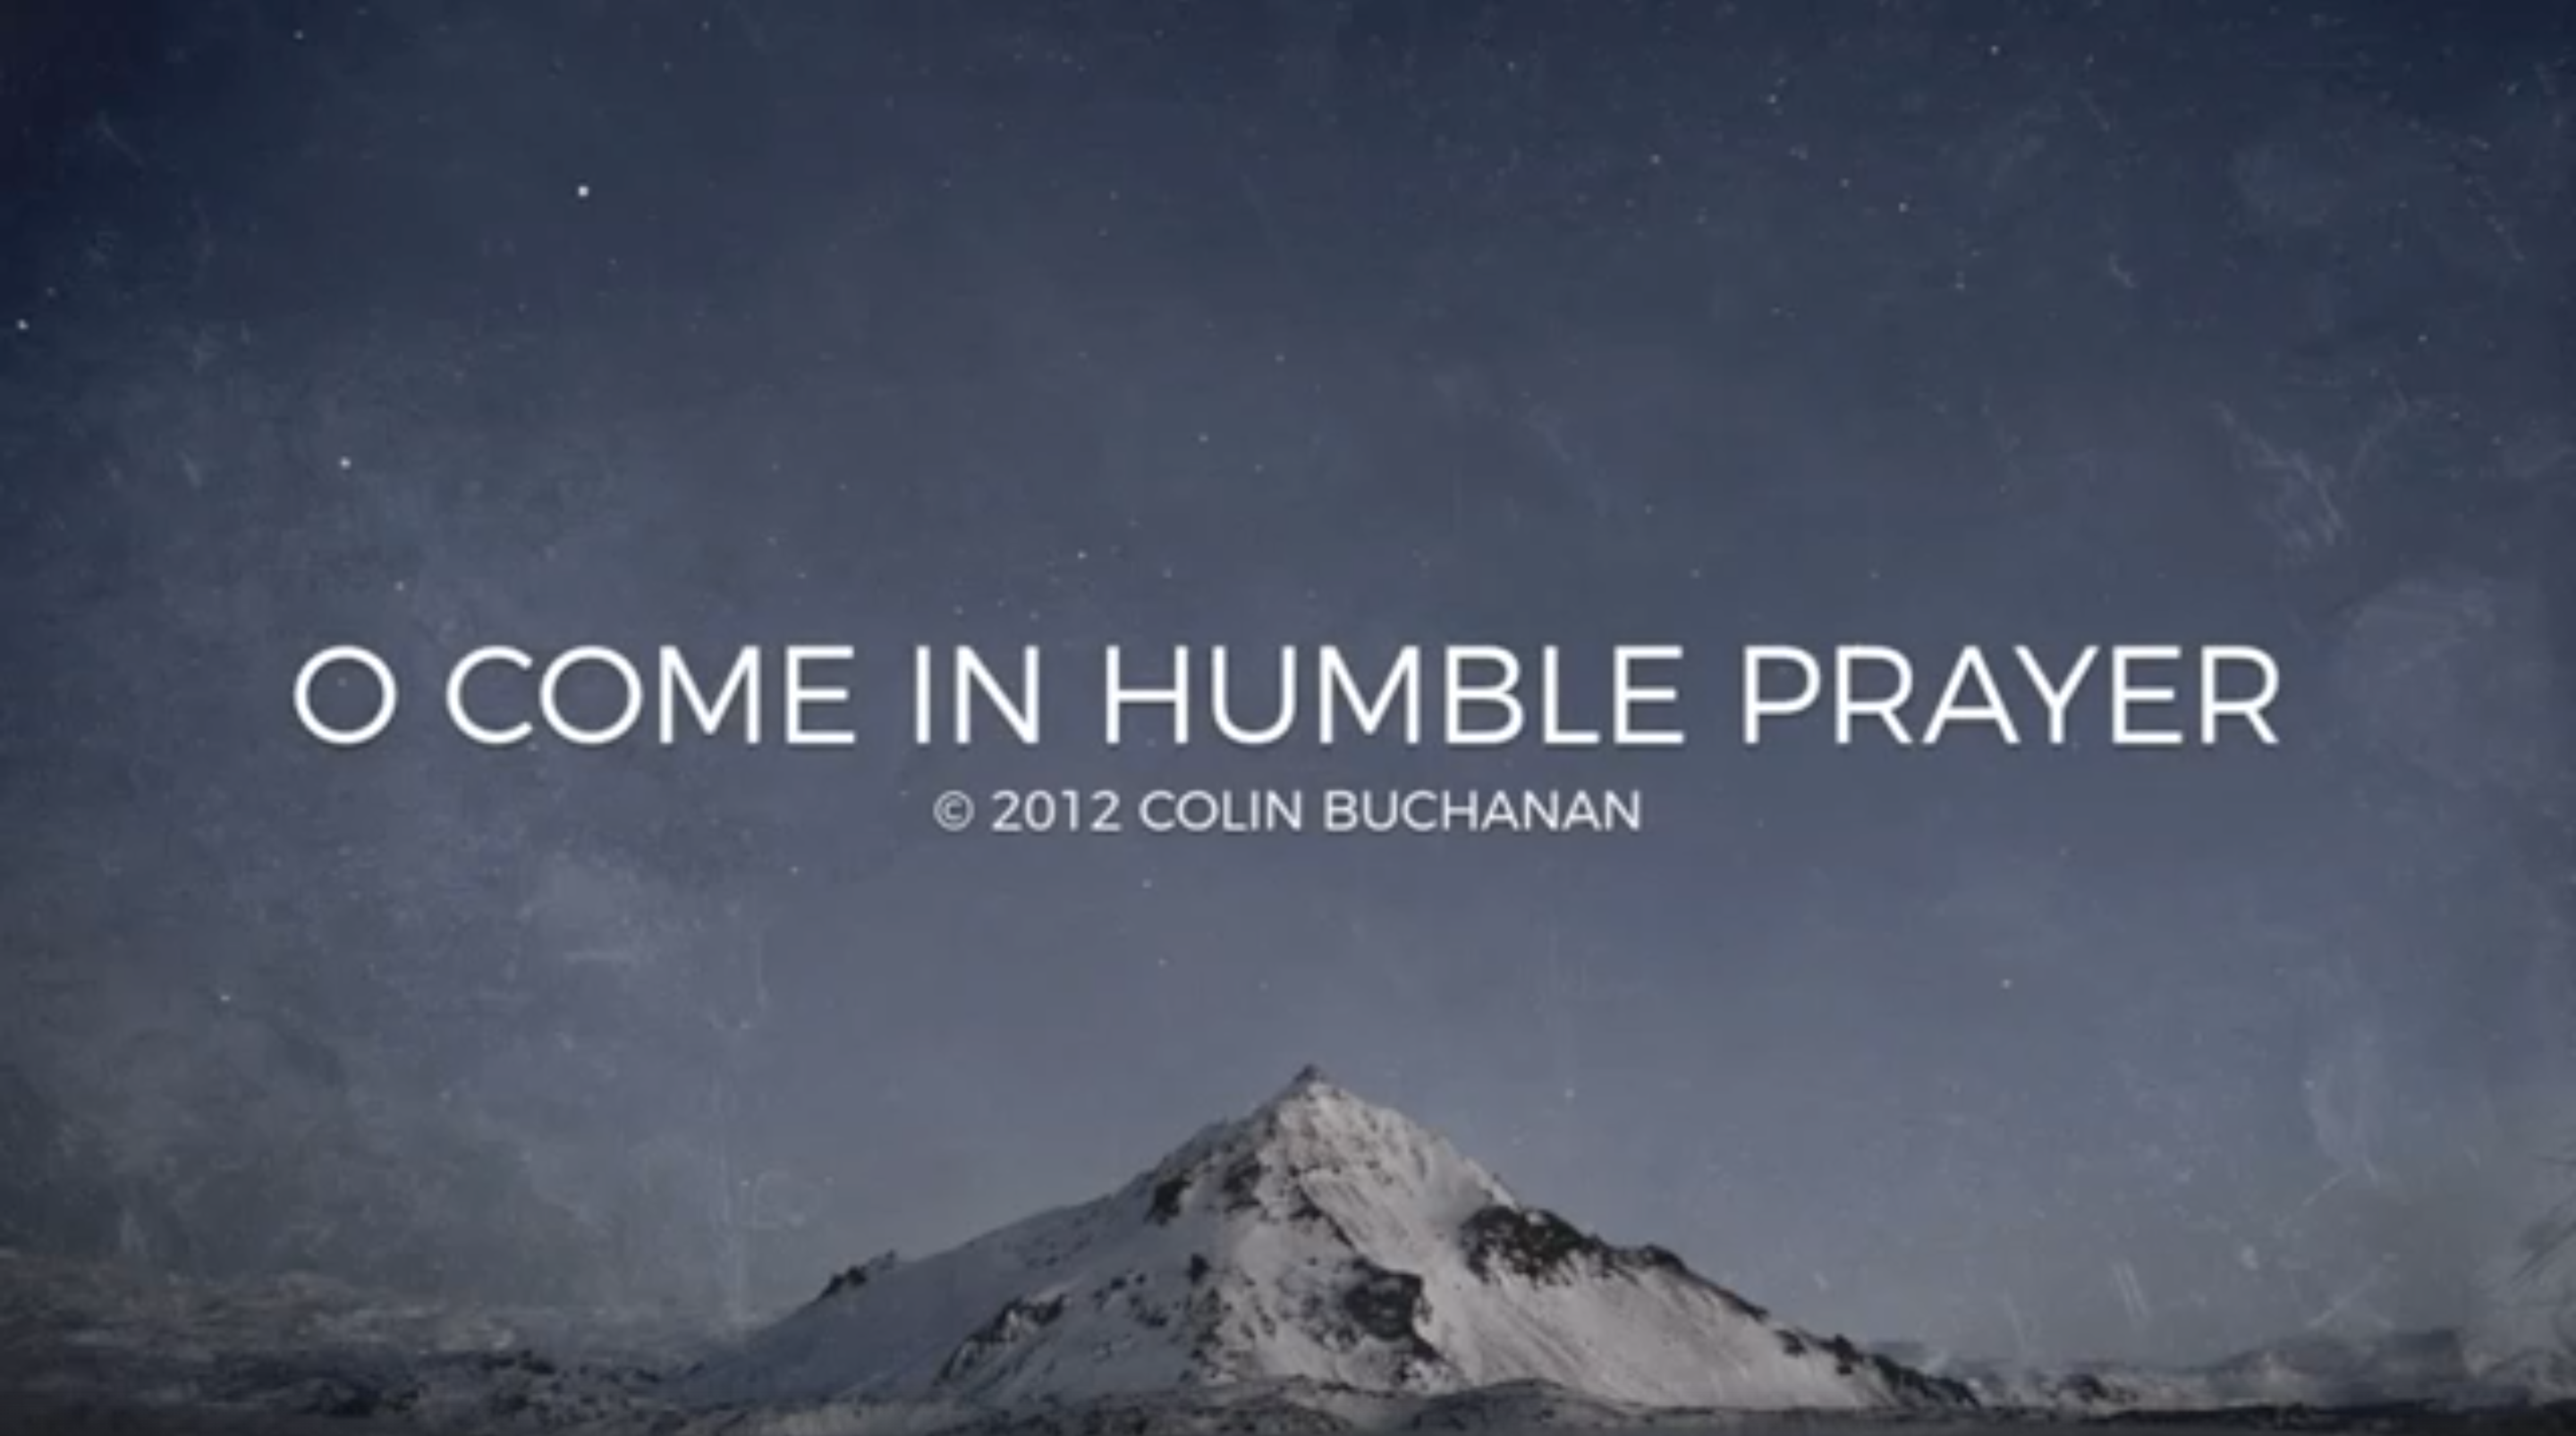 O Come In Humble Prayer